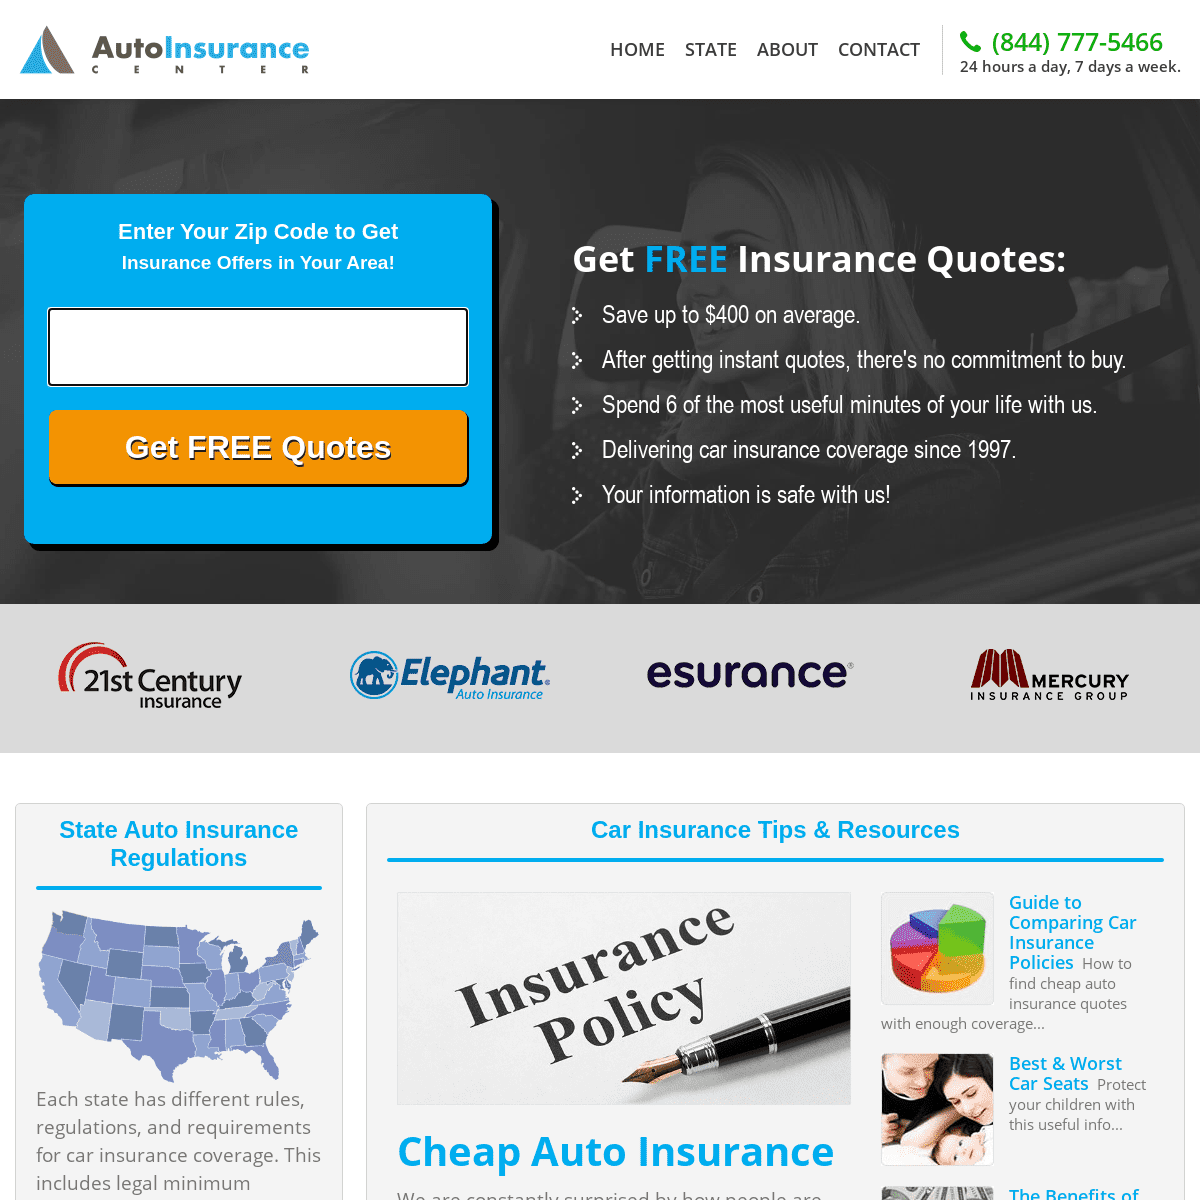 A complete backup of https://autoinsurancecenter.com